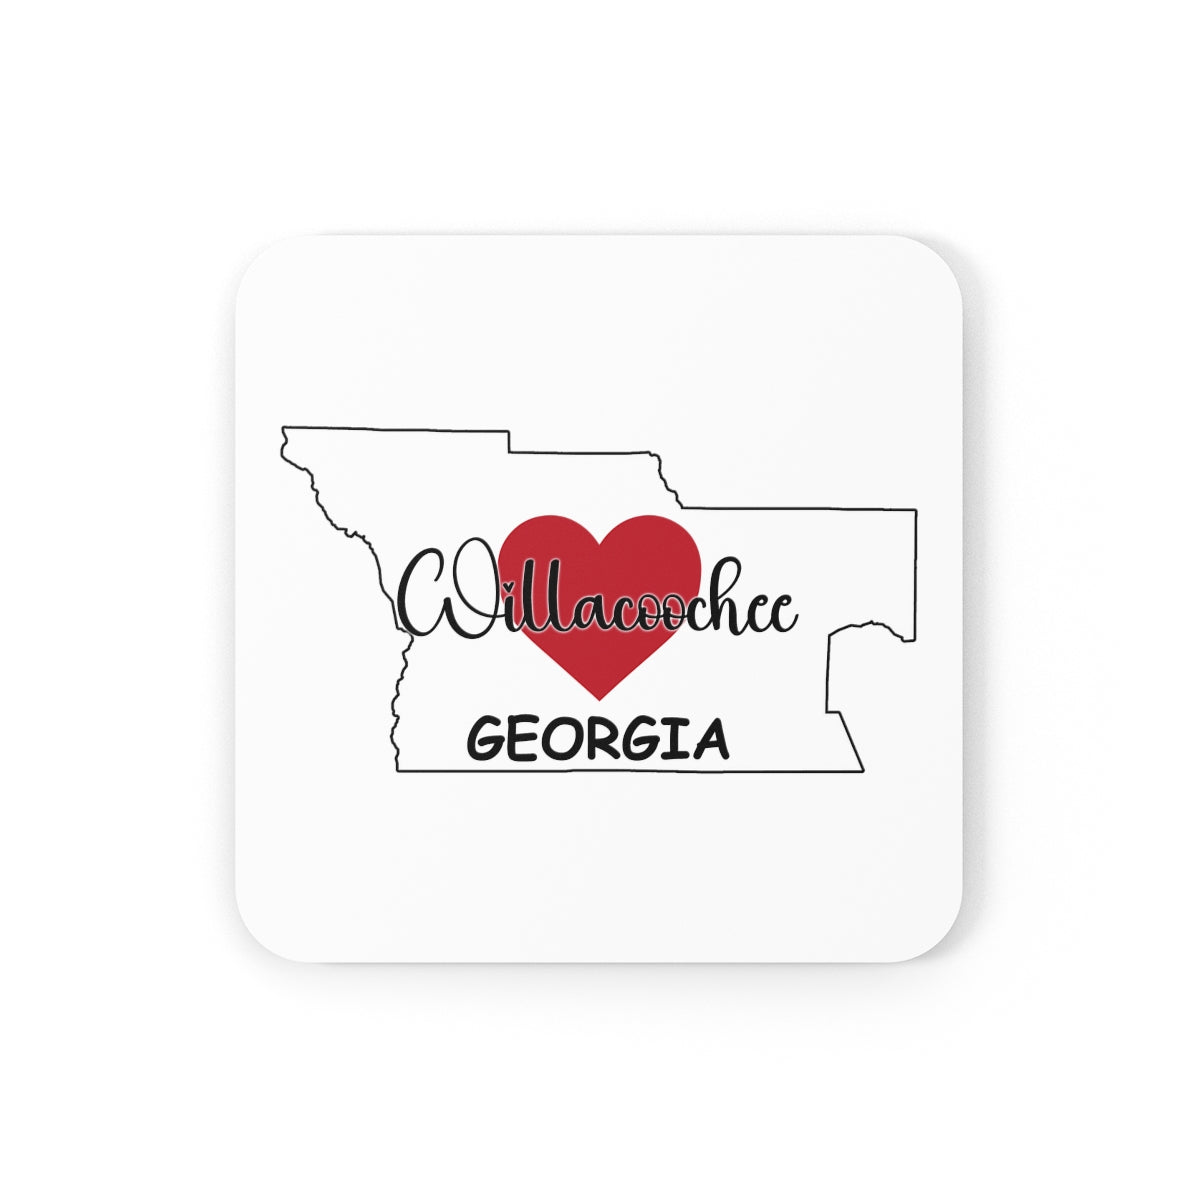 Willacoochee Georgia Corkwood Coaster Set